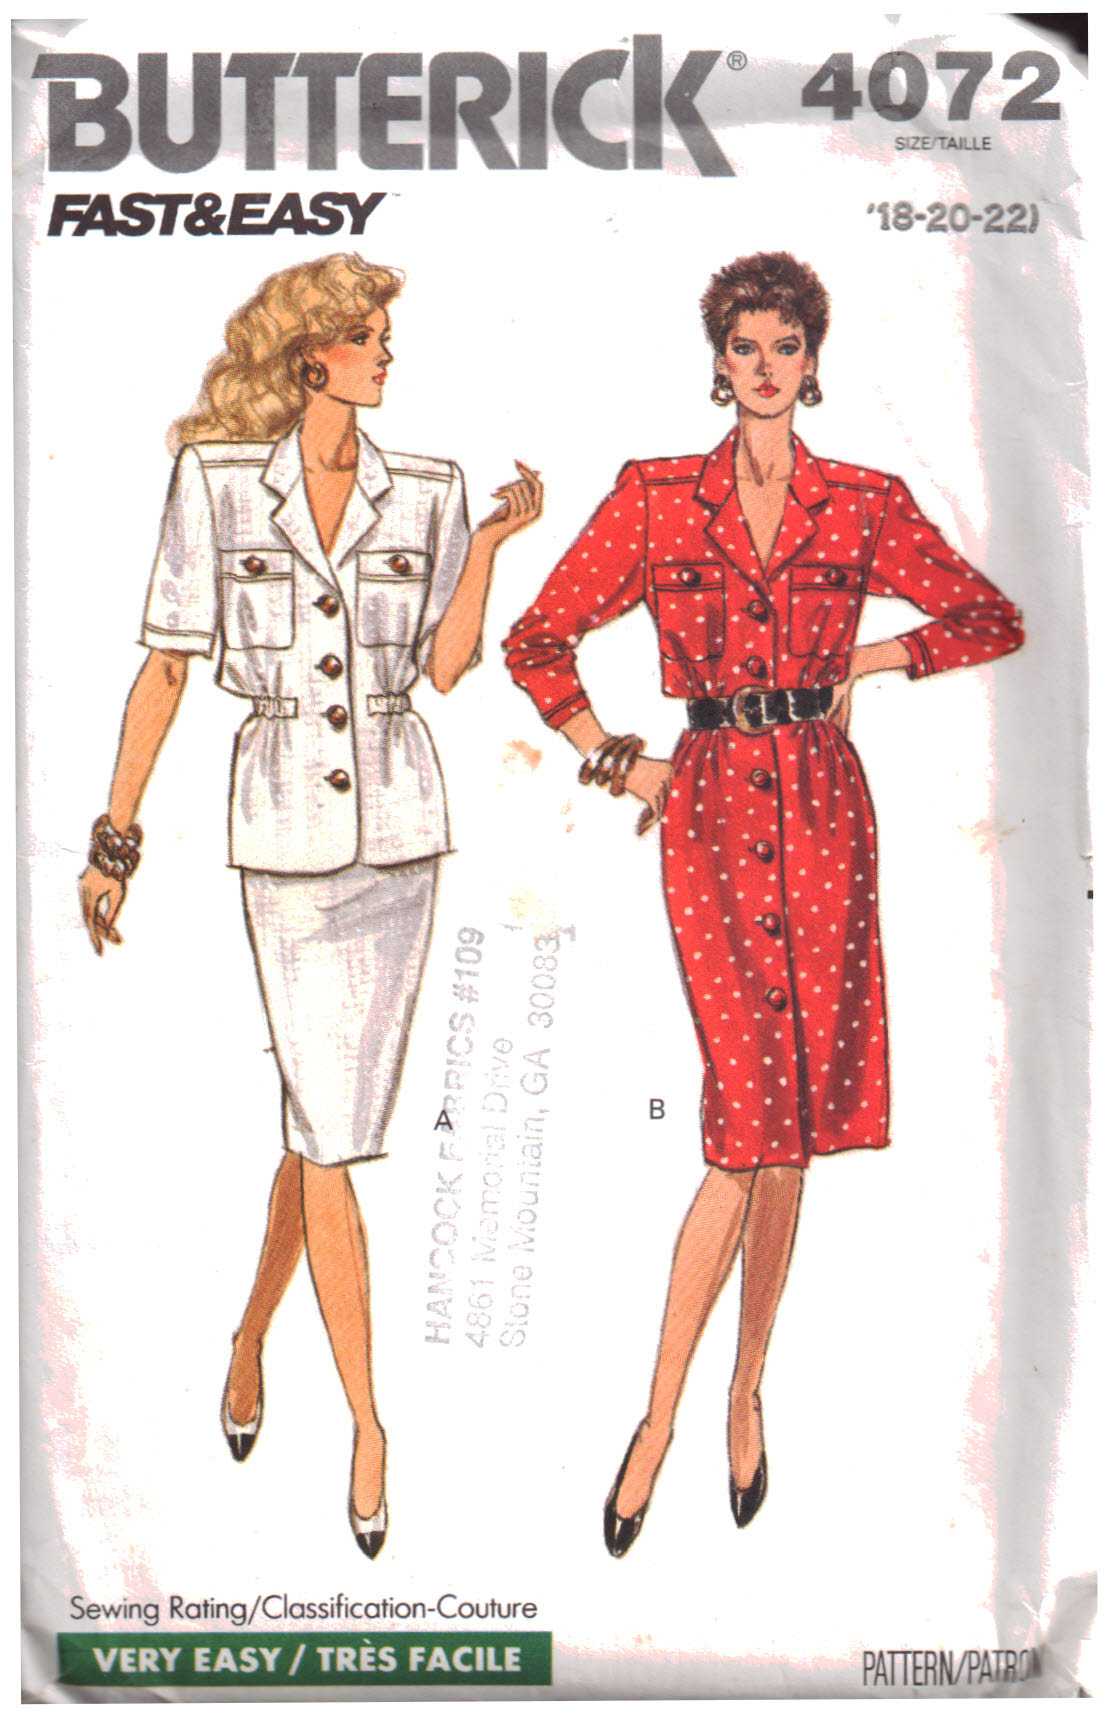 Butterick 4072 Dress, Top, Skirt Size: 18-20-22 Uncut Sewing Pattern